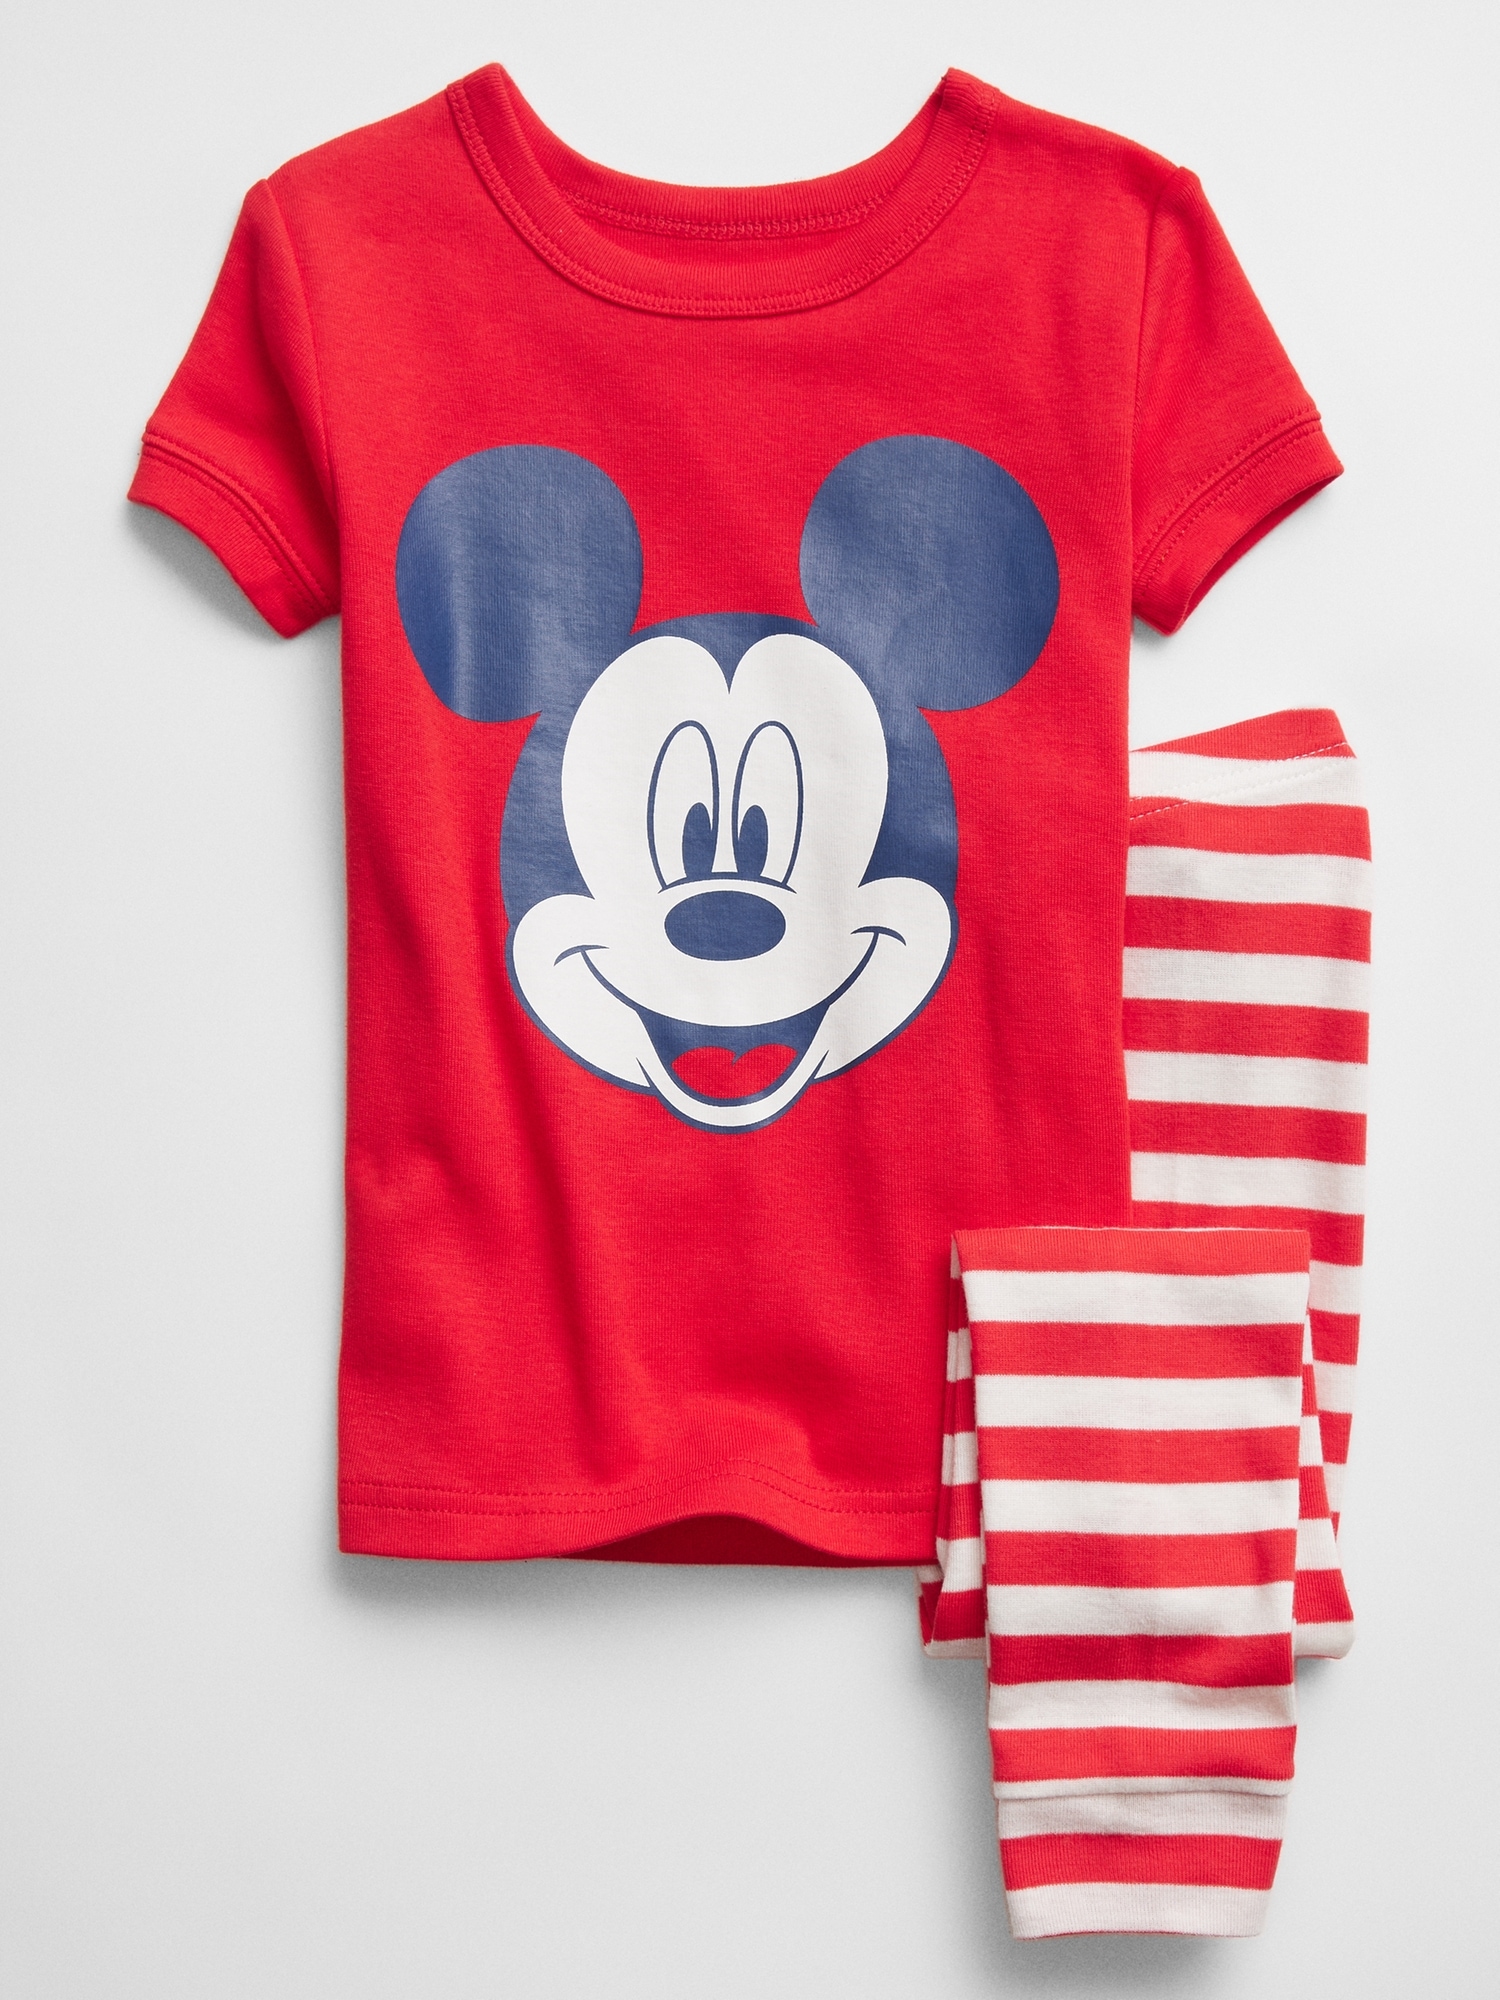 babyGap Disney Baby Mickey Mouse fleece classic PJ set PAJAMAS 2T 3T N8 NNN NWT 